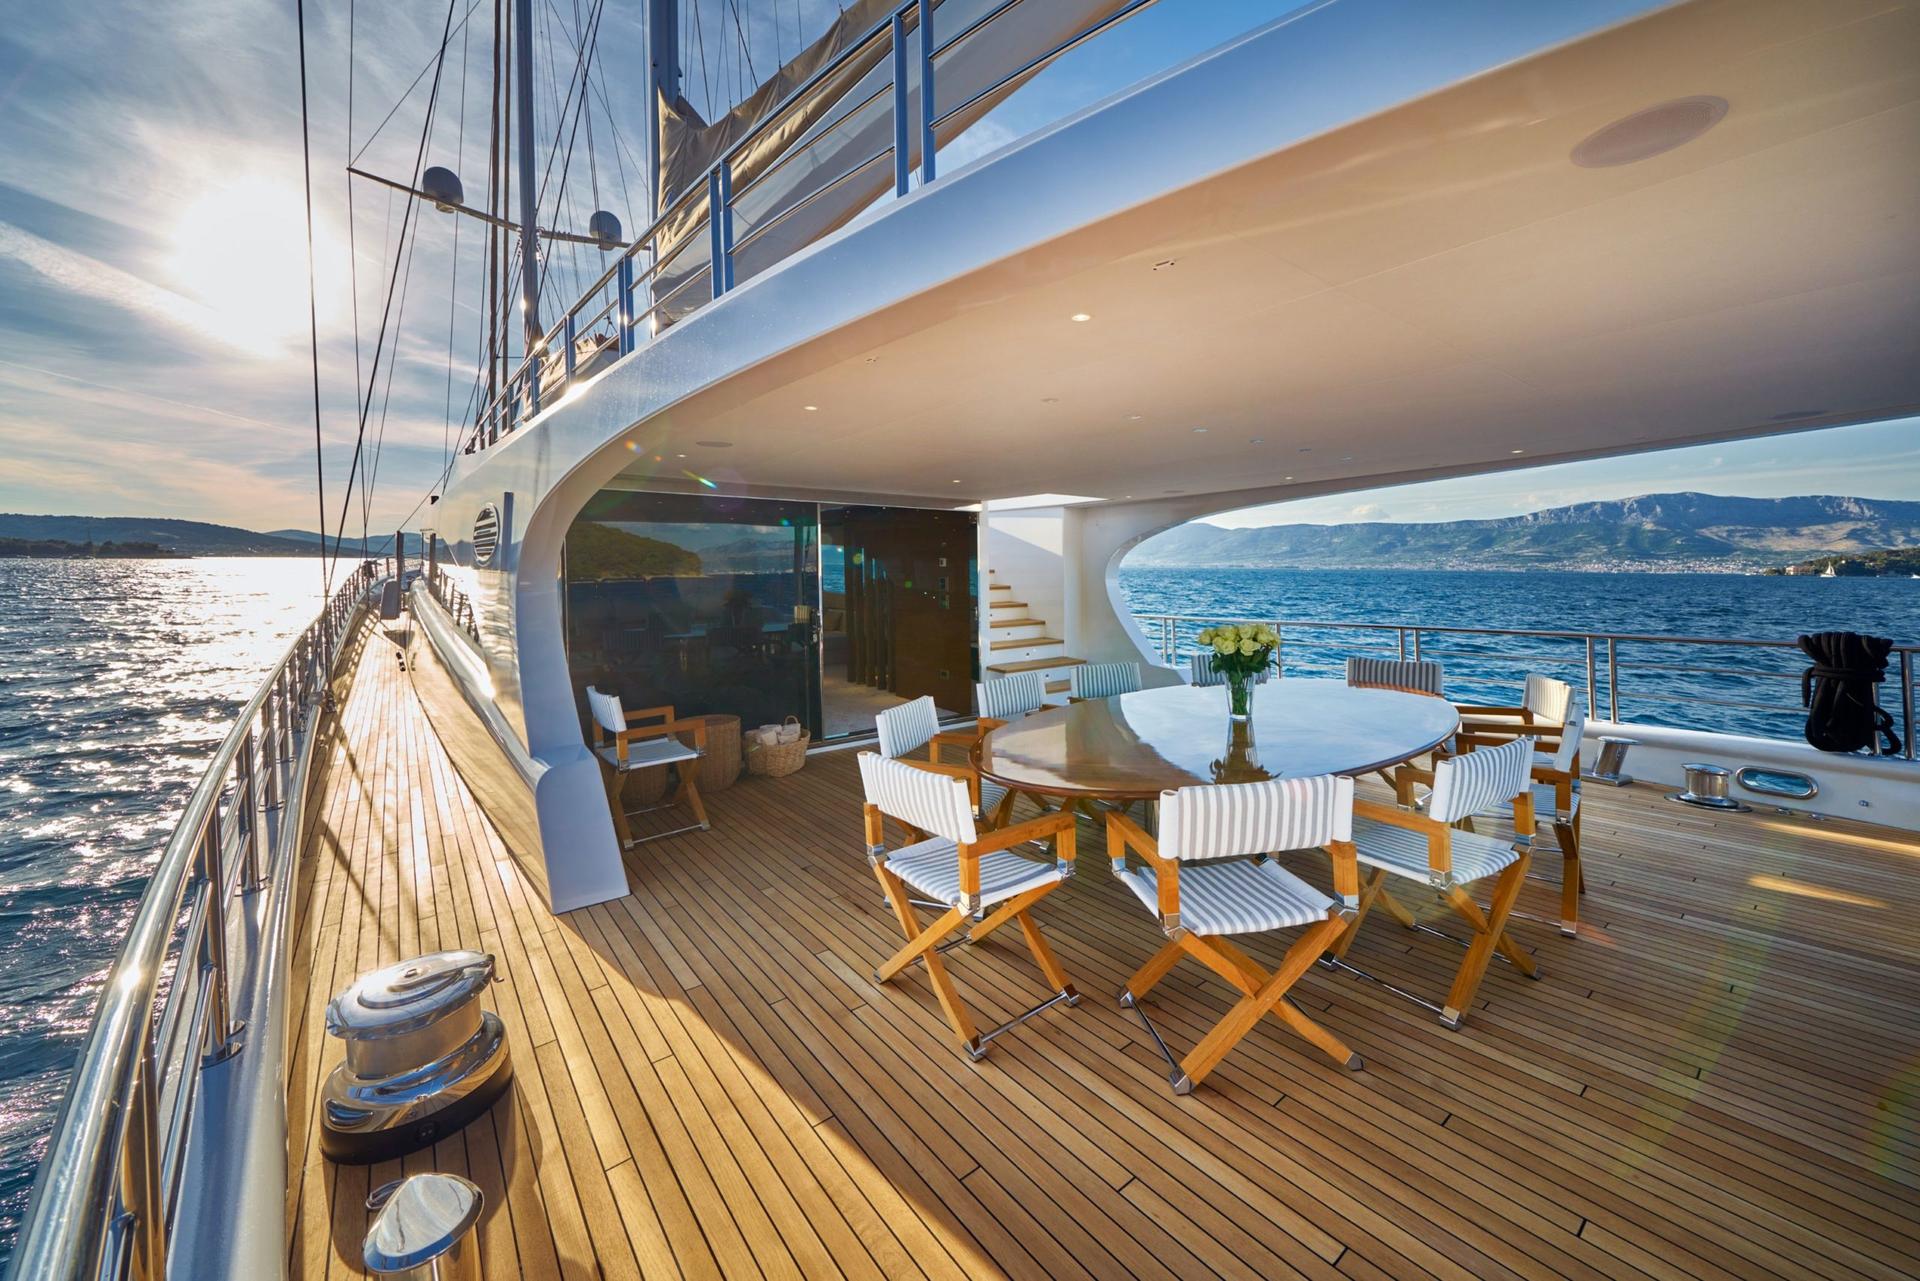 Luxury Yacht Acapella dining area